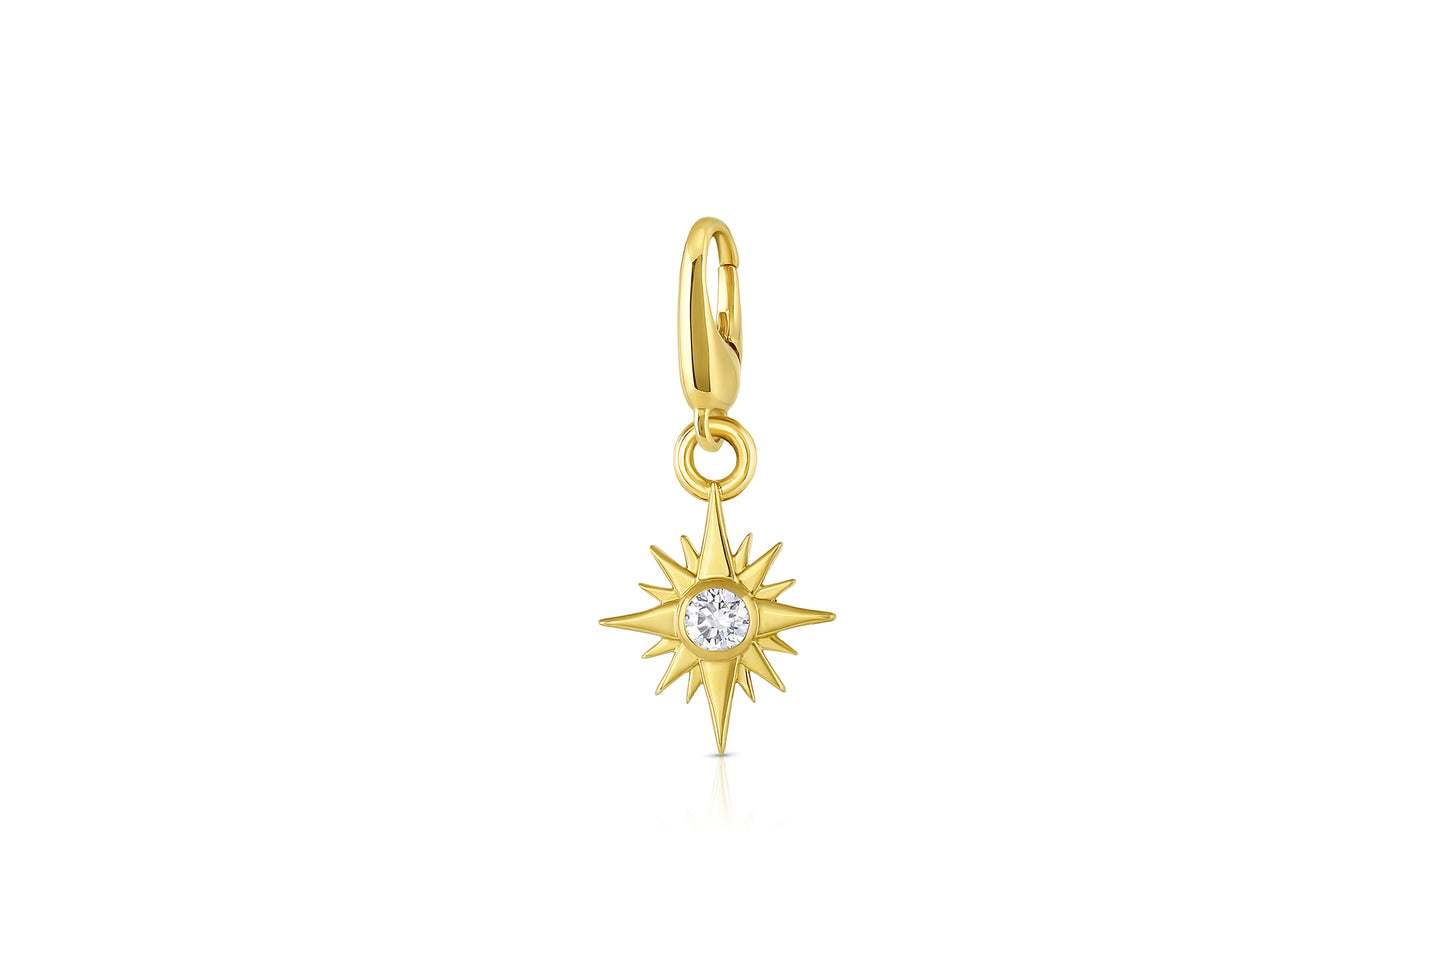 18k yellow gold star charm with diamond center stone on white background.